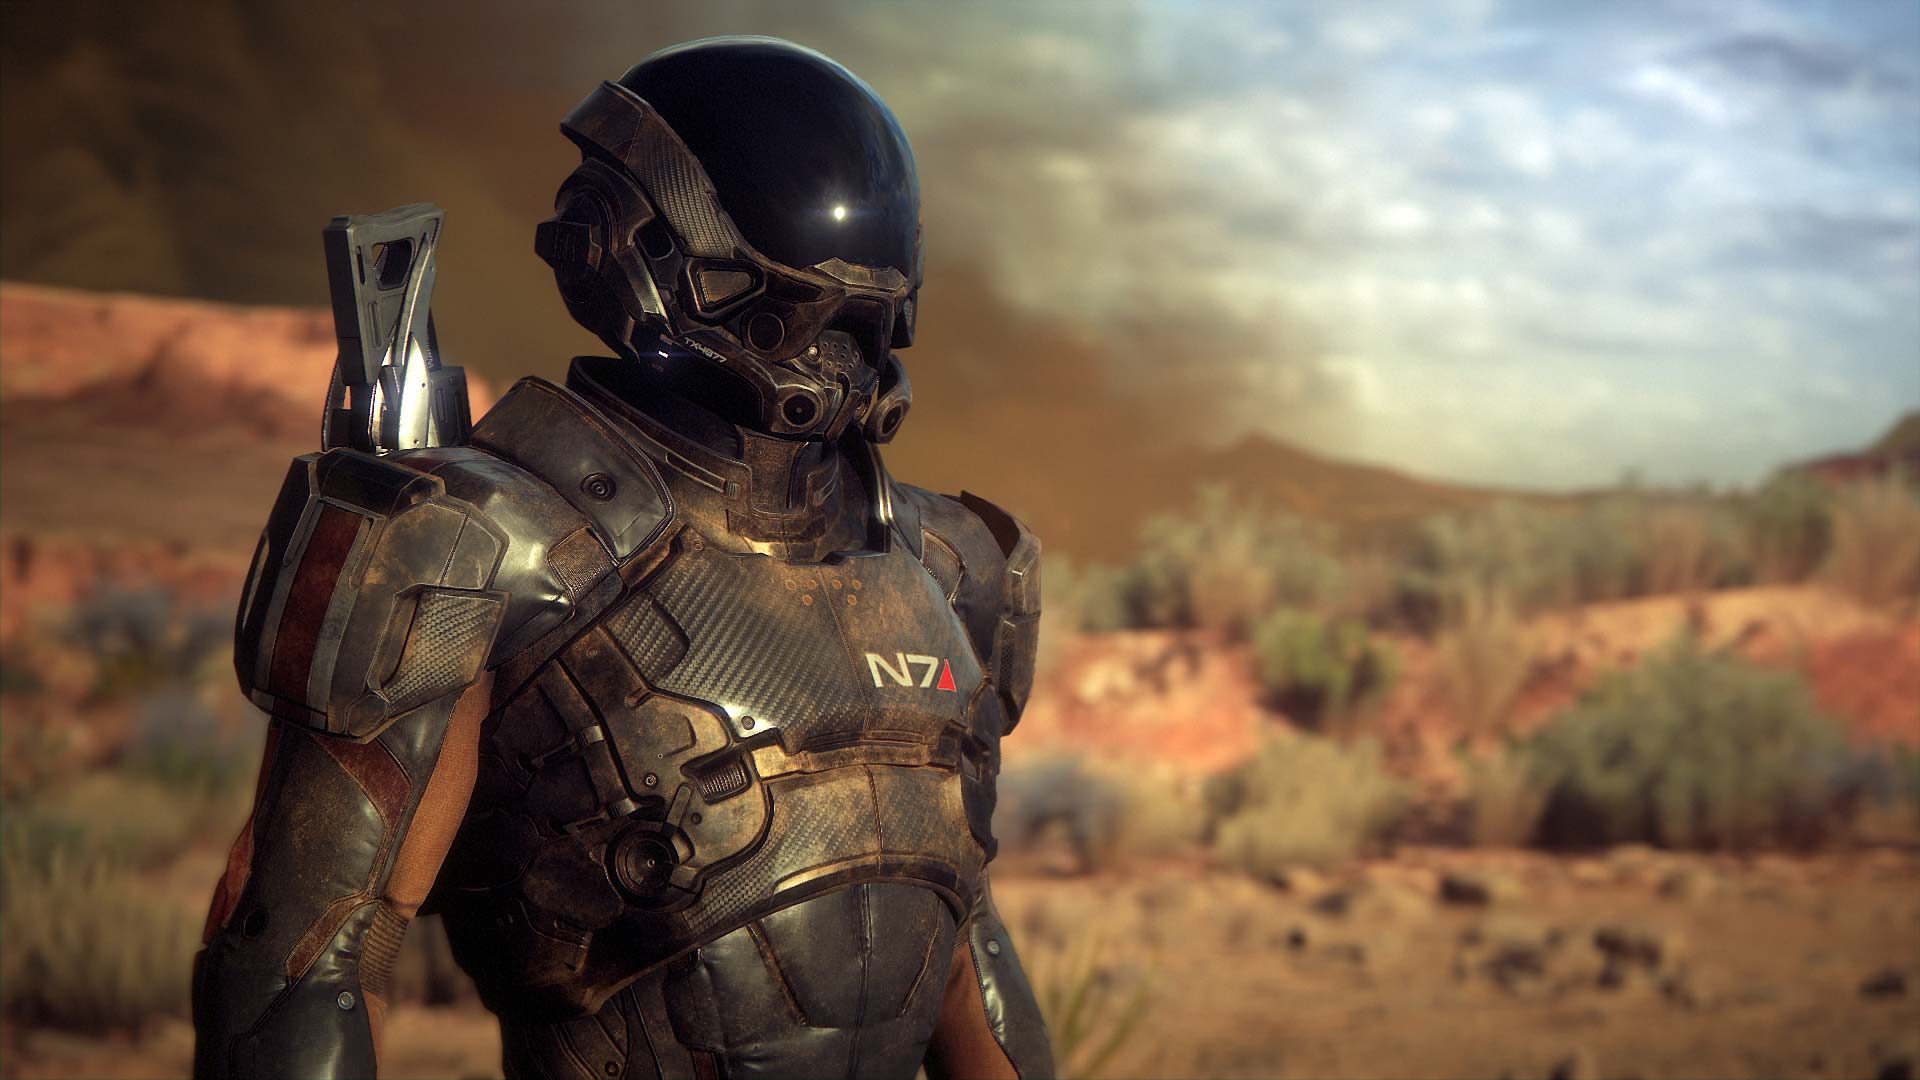 Mass Effect Andromeda gameplay in nieuwe trailer